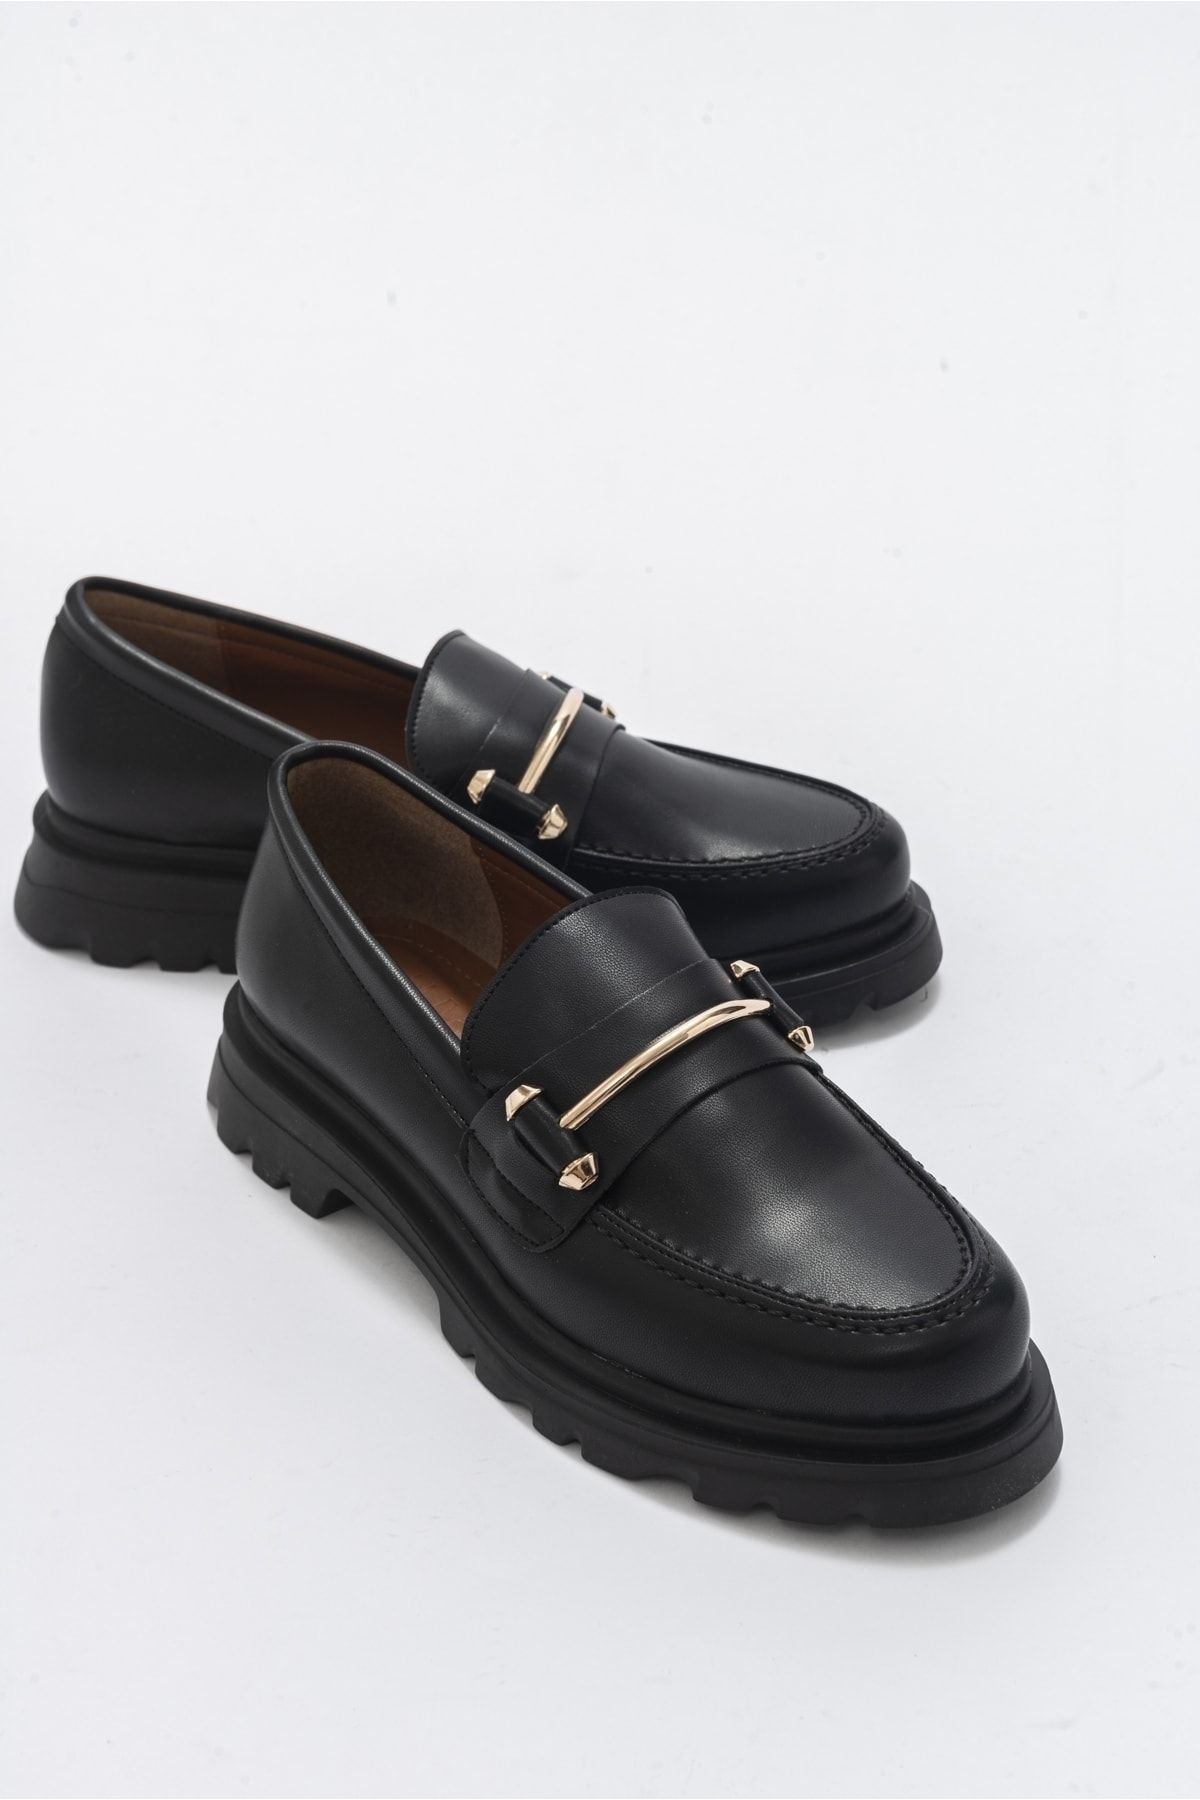 luvishoes Dual Siyah Cilt Kadın Oxford Ayakkabı